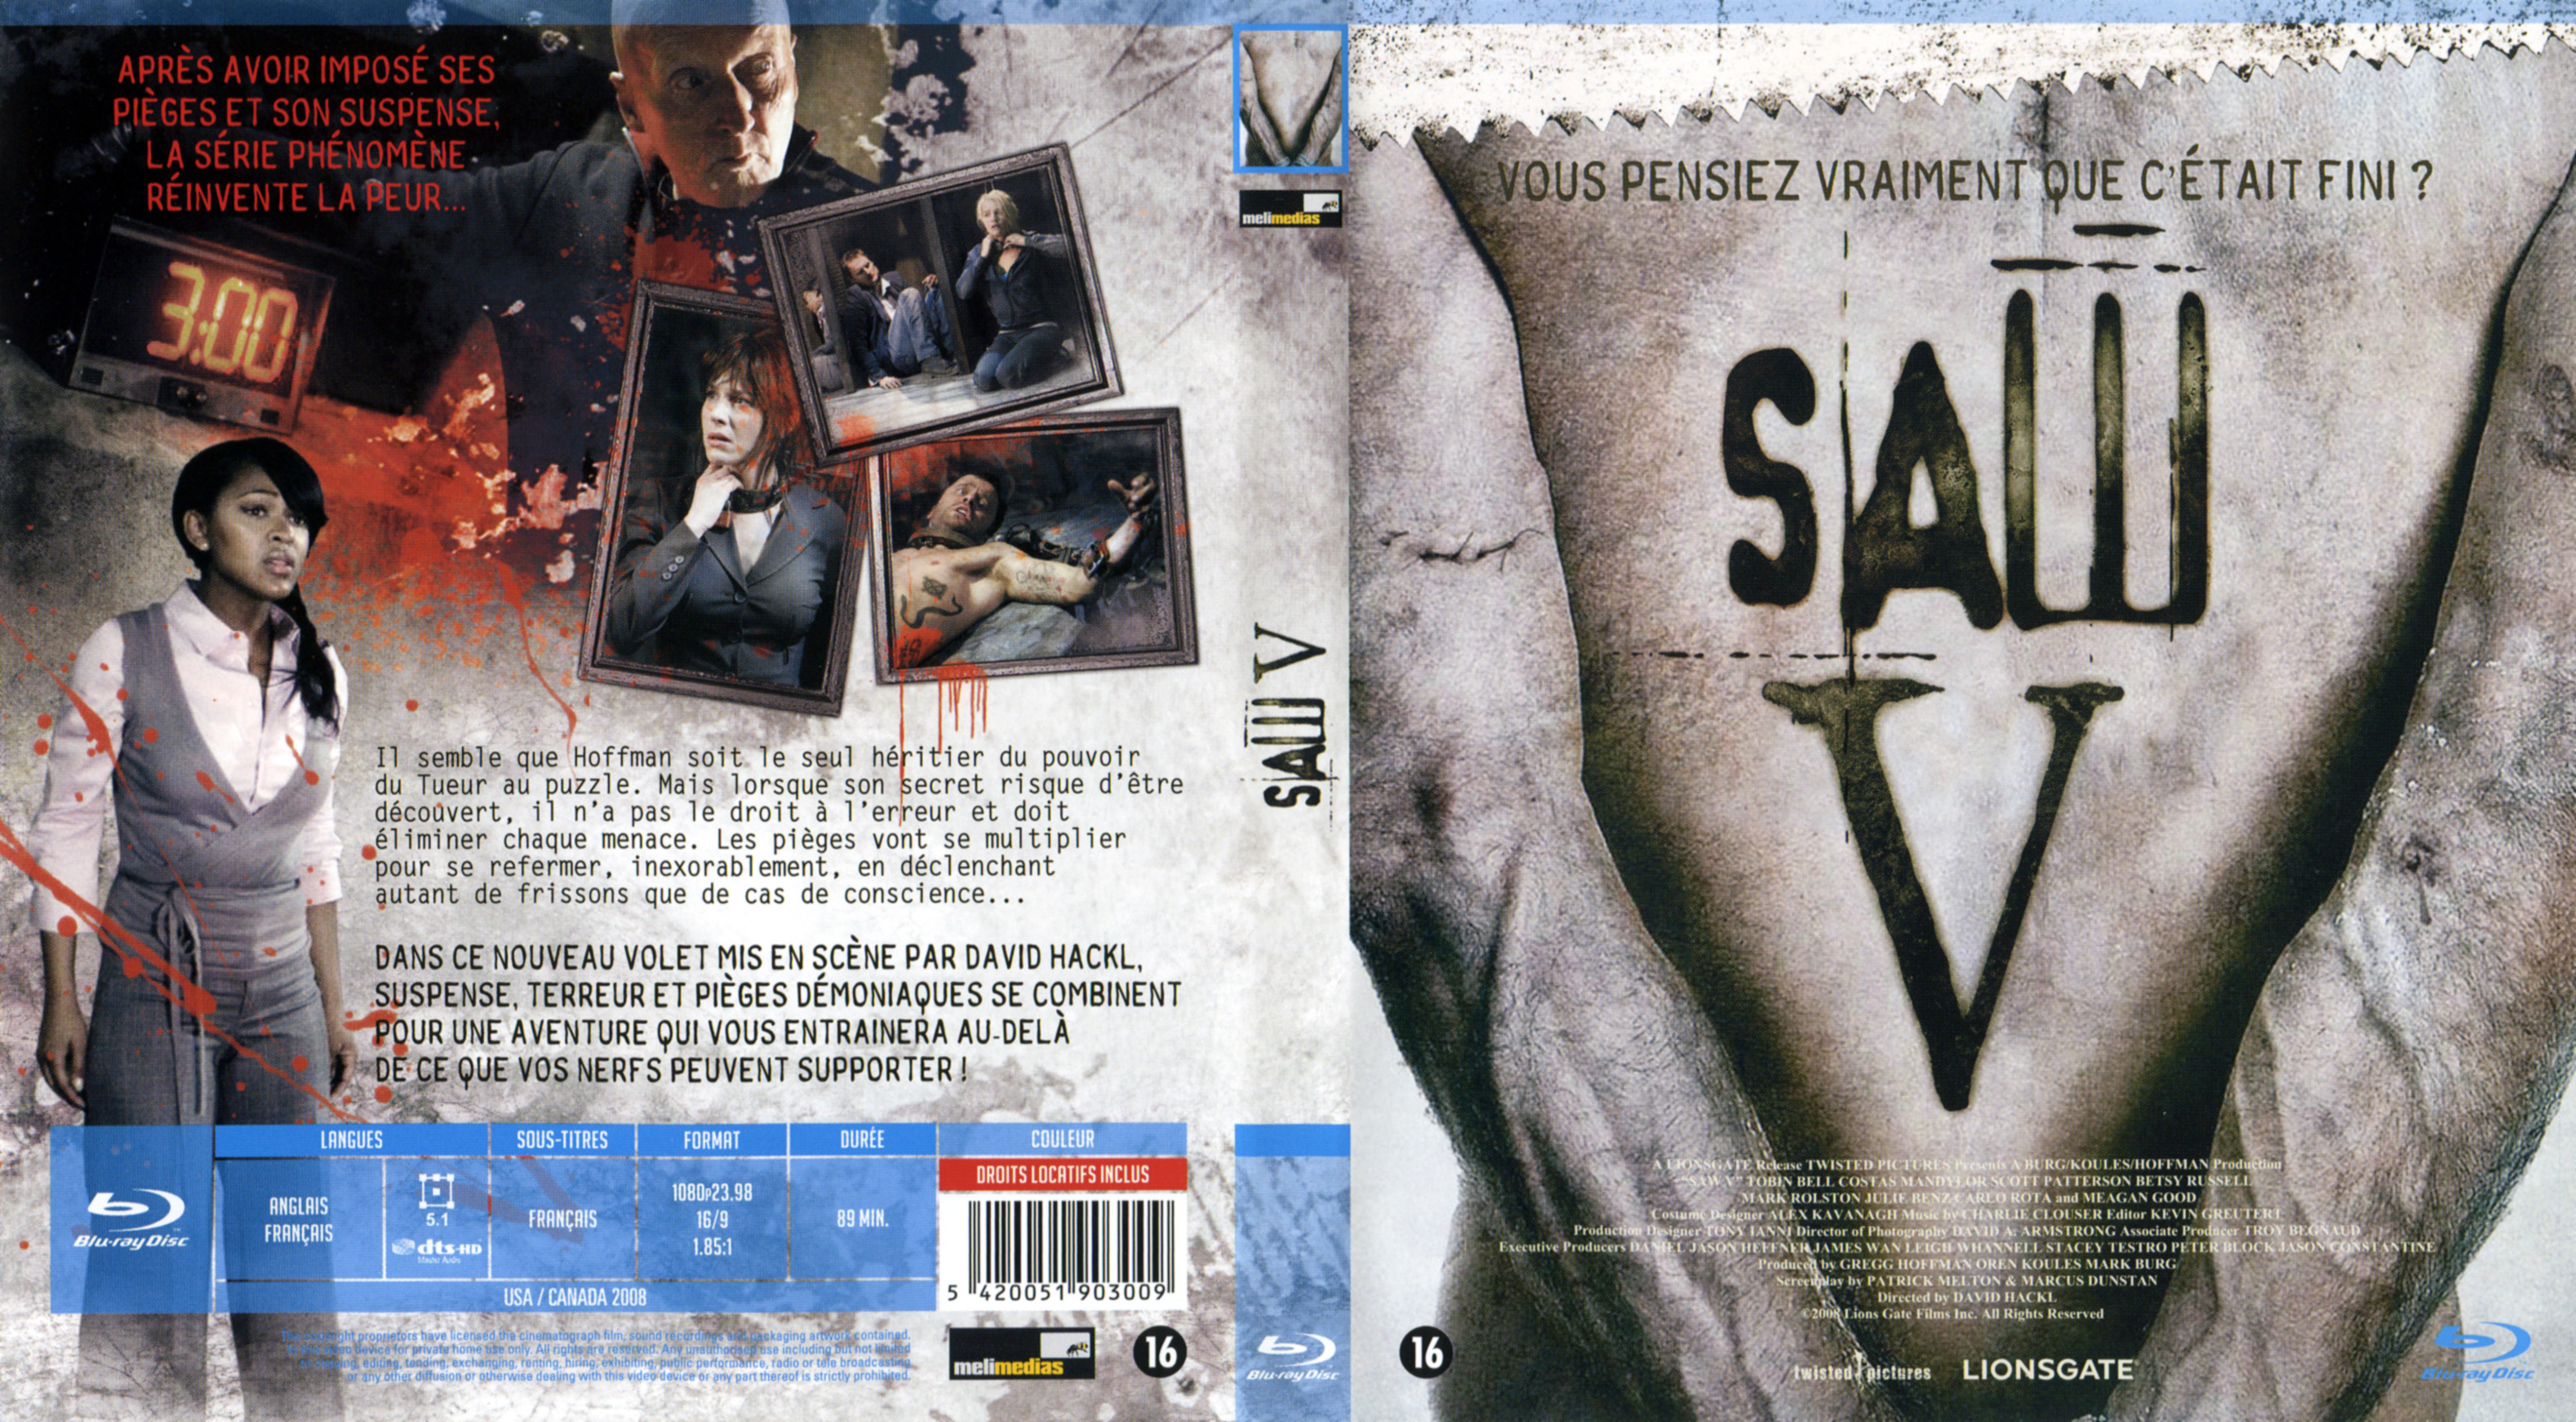 Jaquette DVD Saw 5 (BLU-RAY) v2